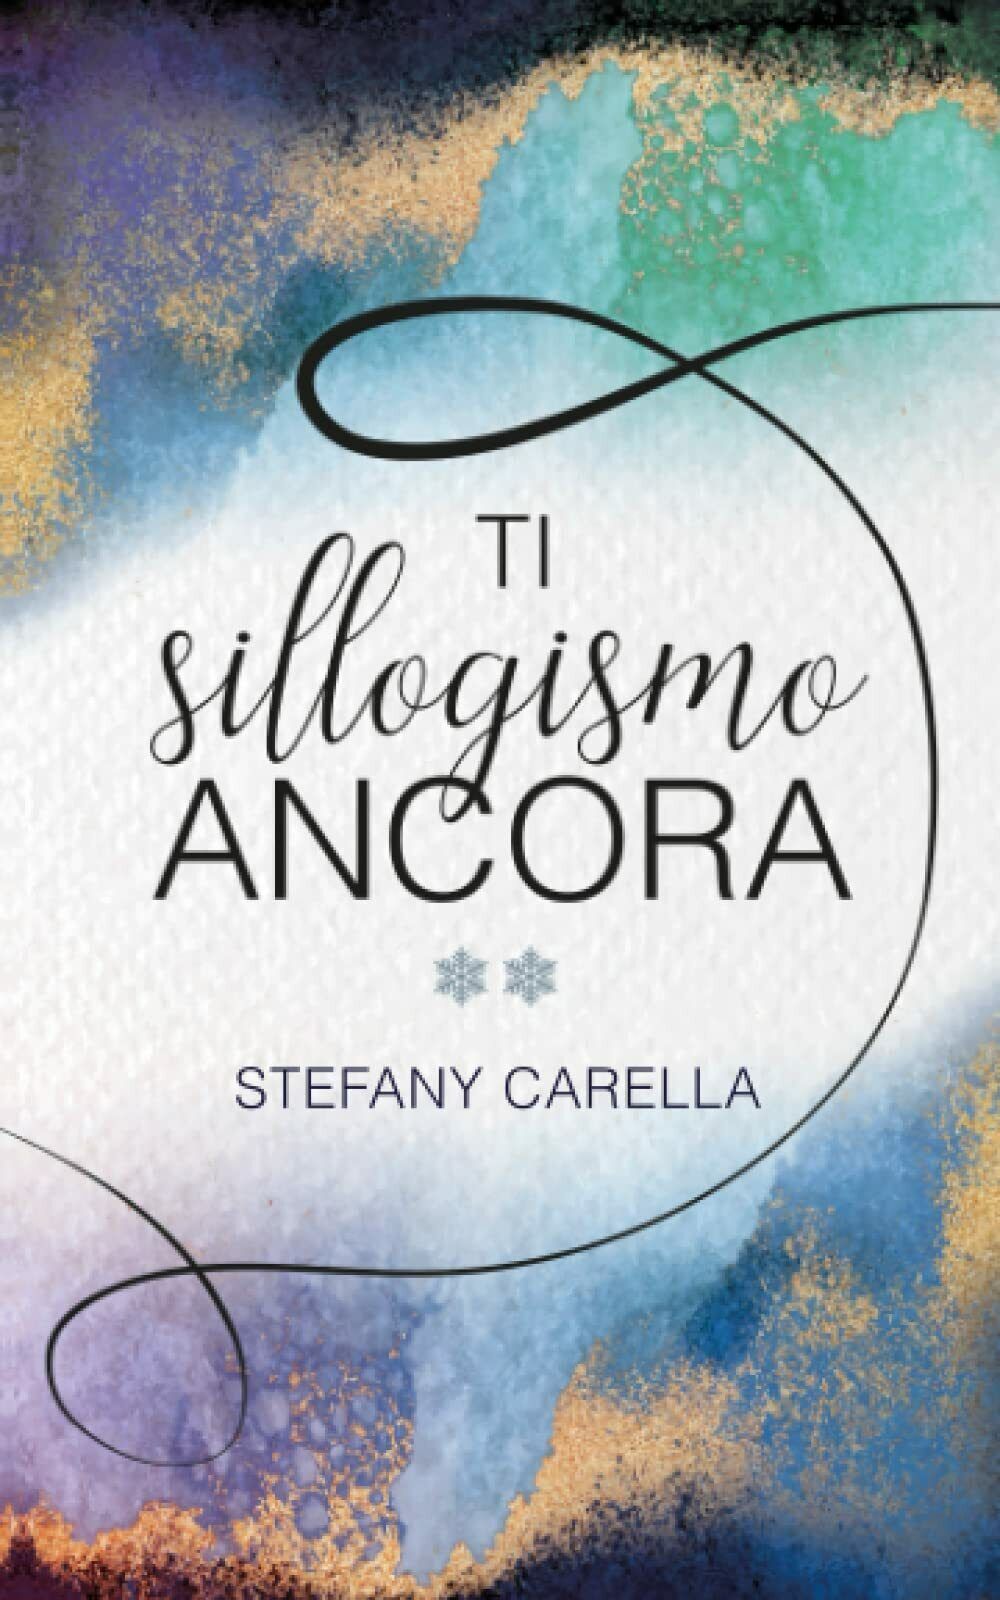 Ti sillogismo ancora di Stefany Carella,  2022,  Indipendently Published